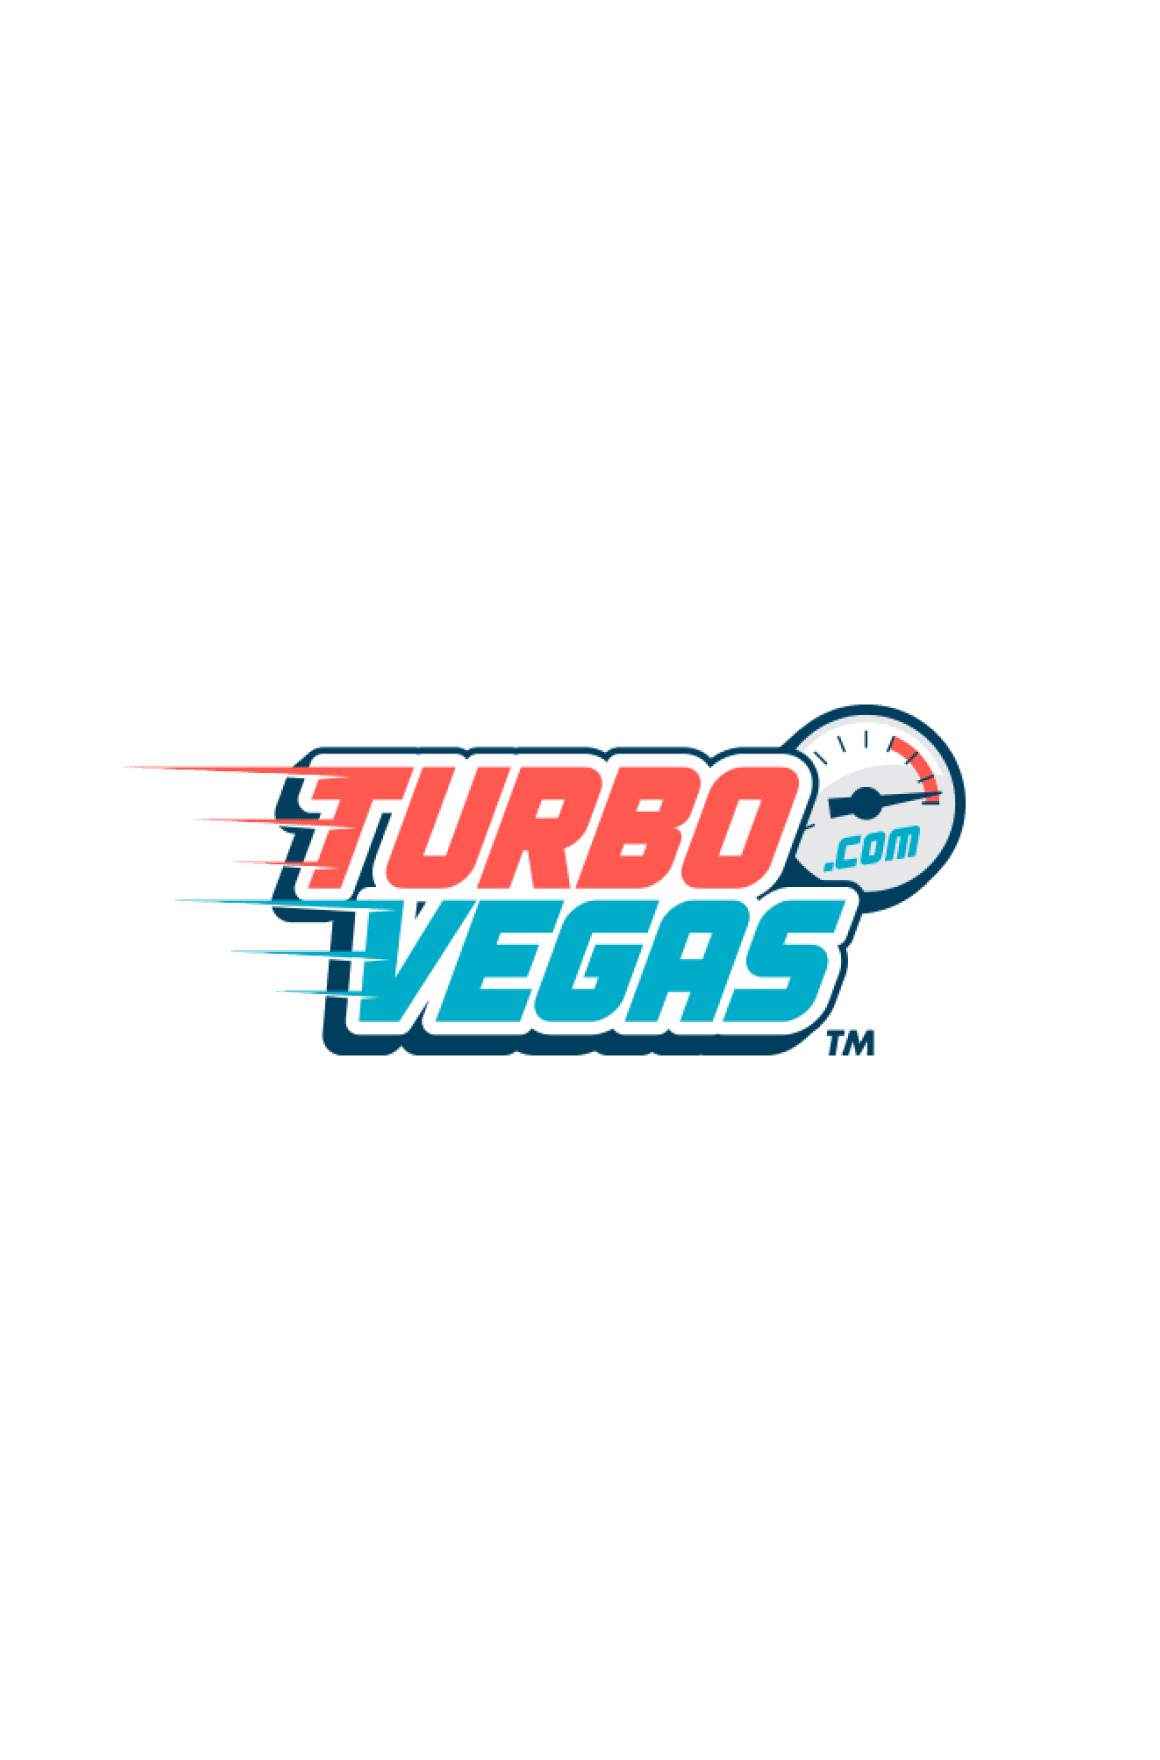 TurboVegas